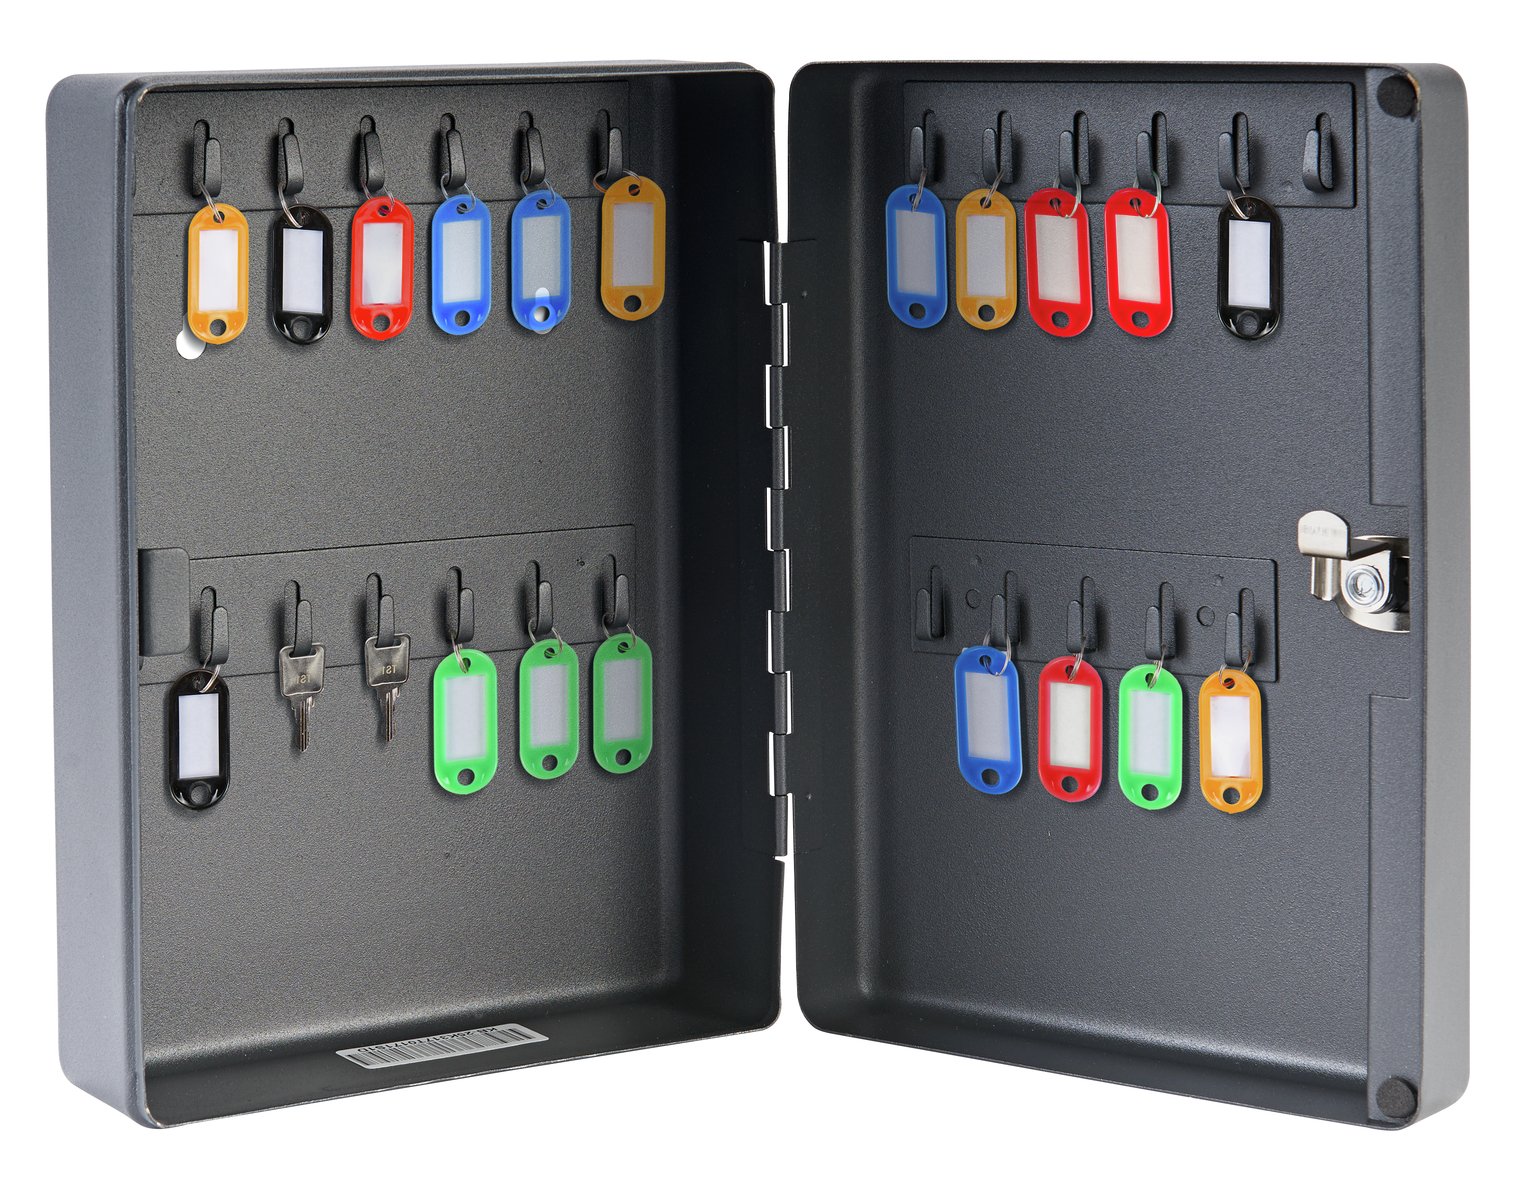 Master Lock 19cm 25 Key Cabinet Safe review